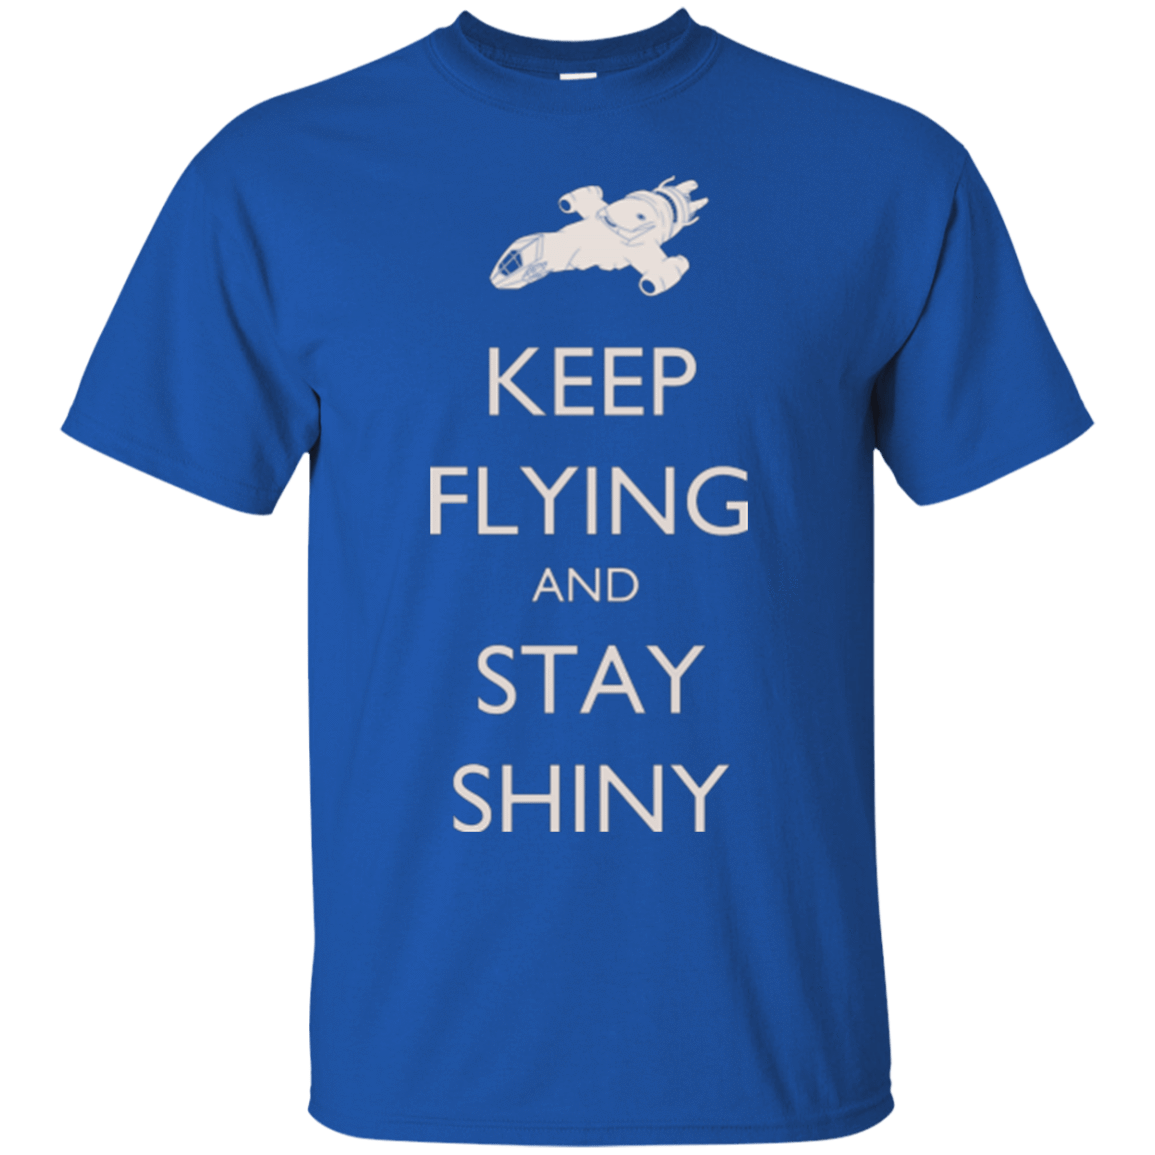 T-Shirts Royal / Small Stay Shiny T-Shirt